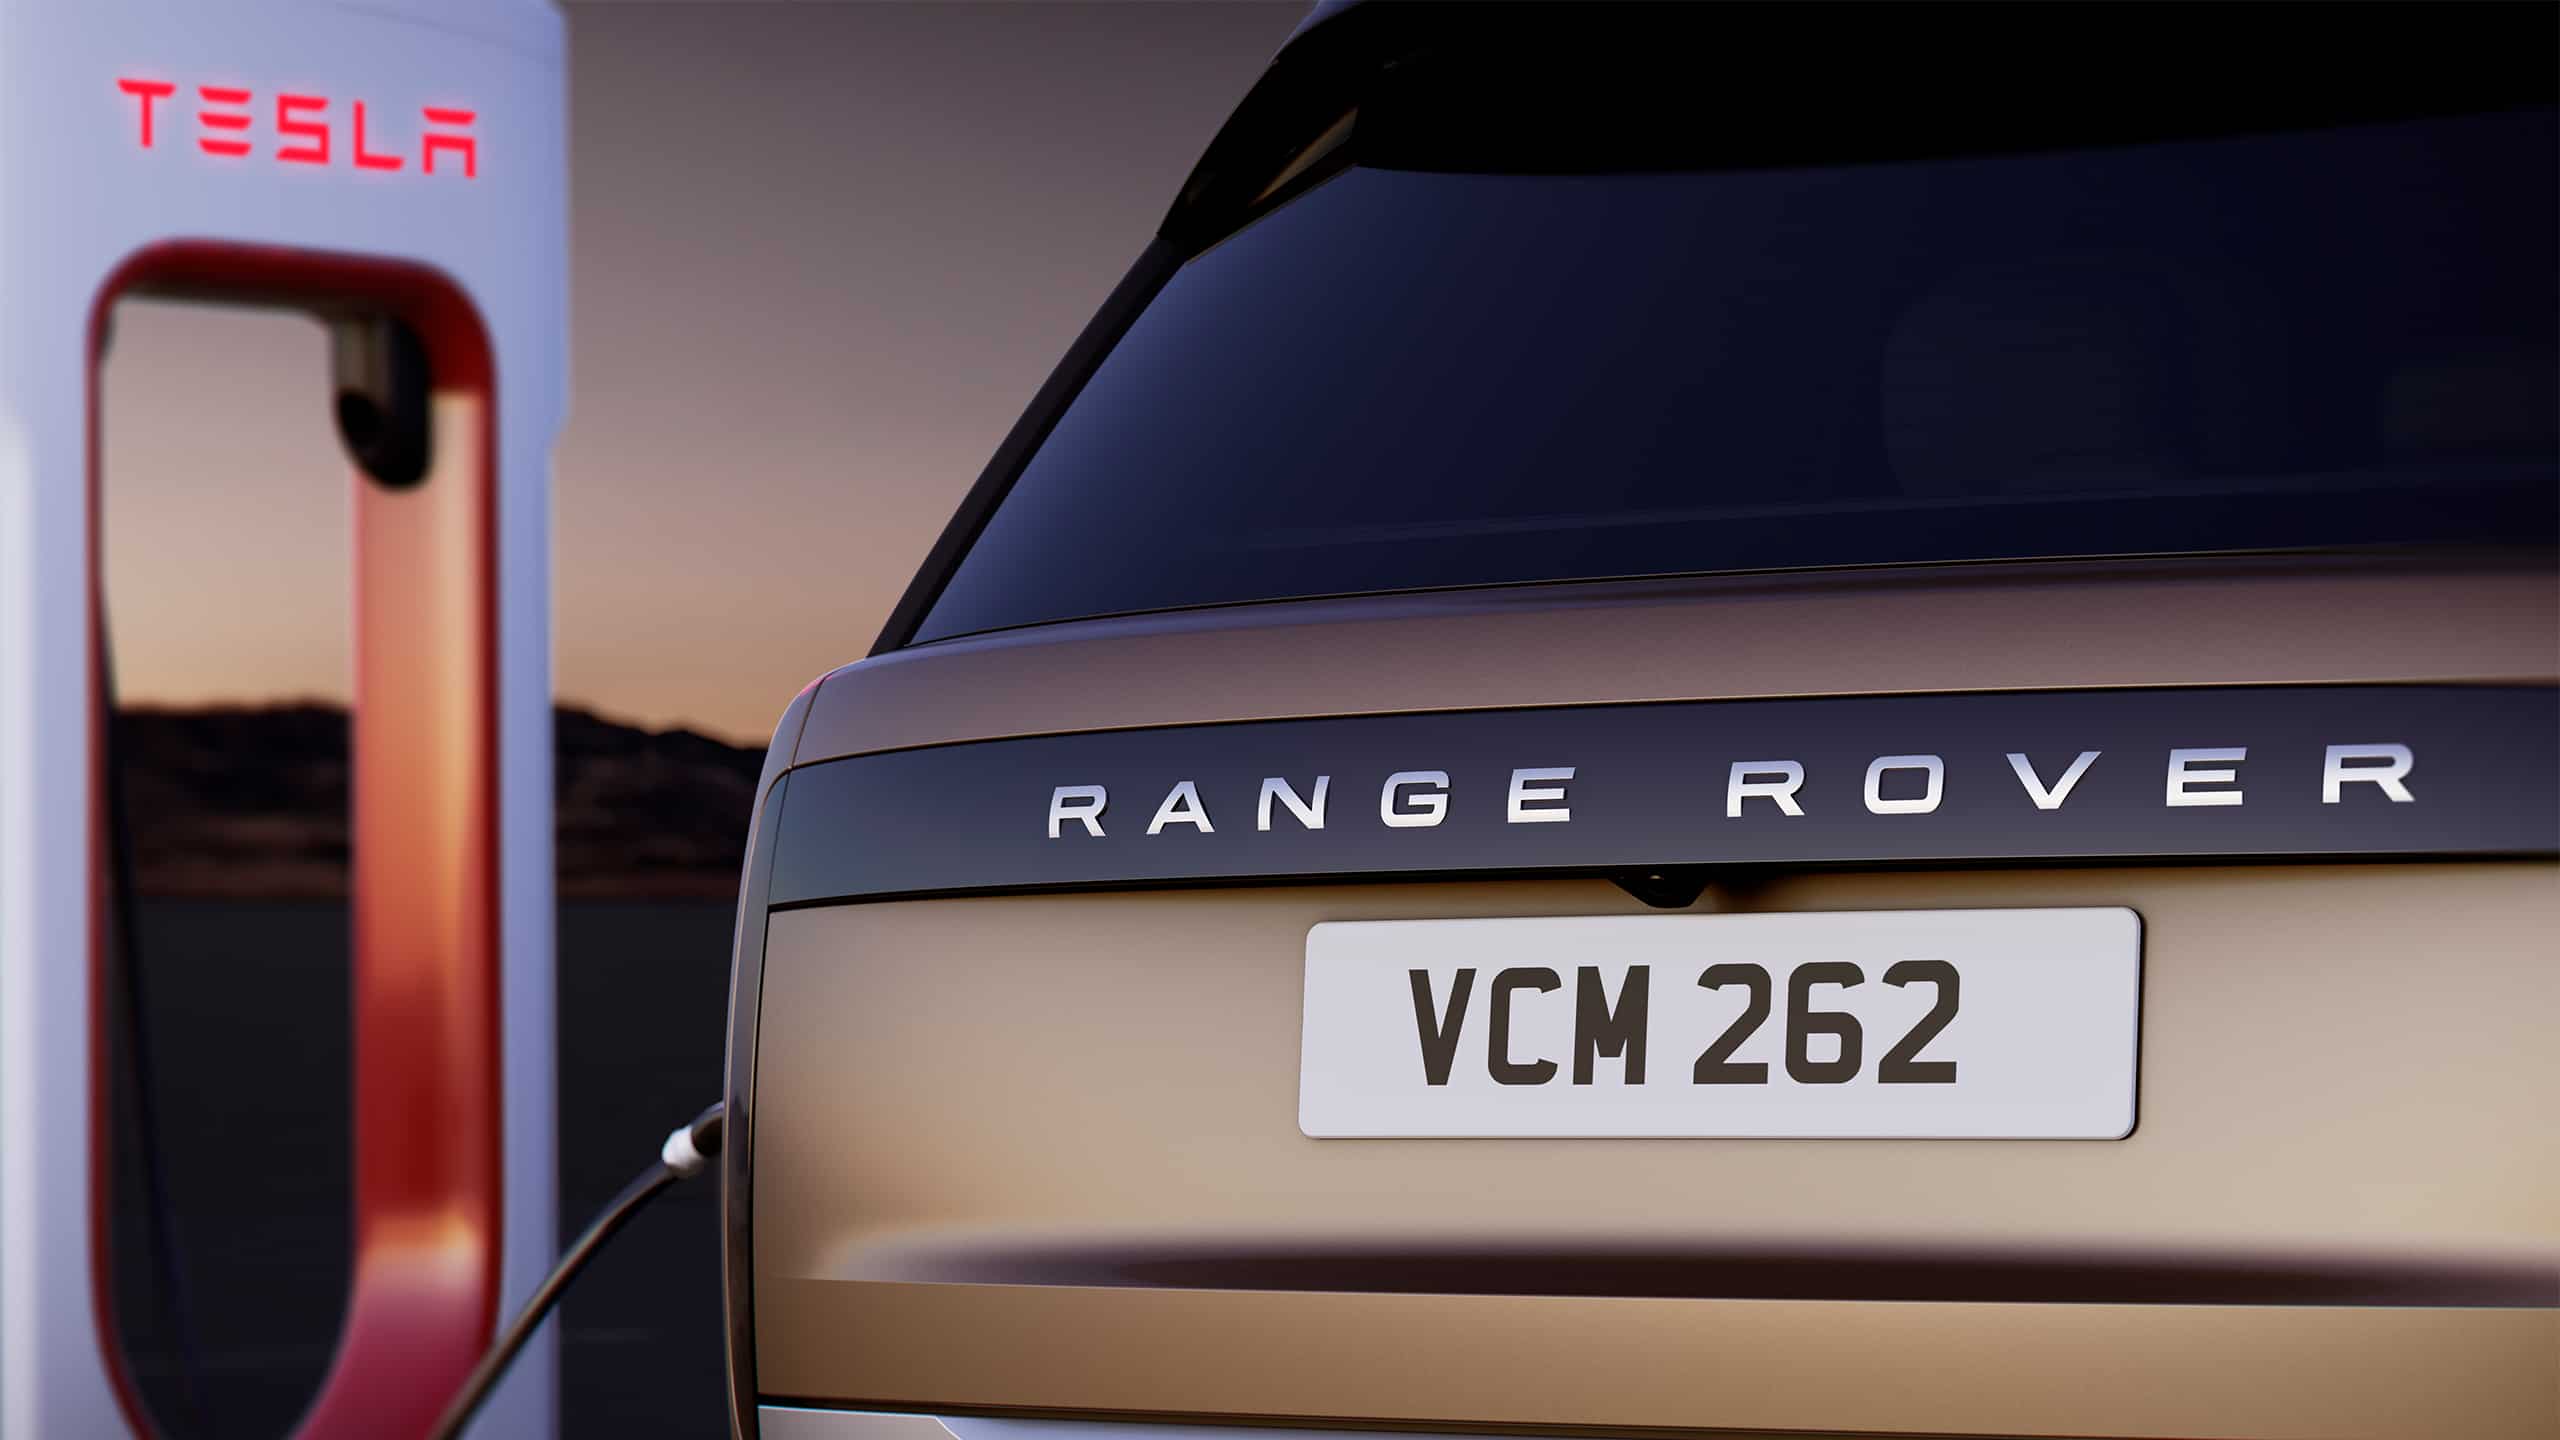 Tesla Supercharing Comms in Range Rover